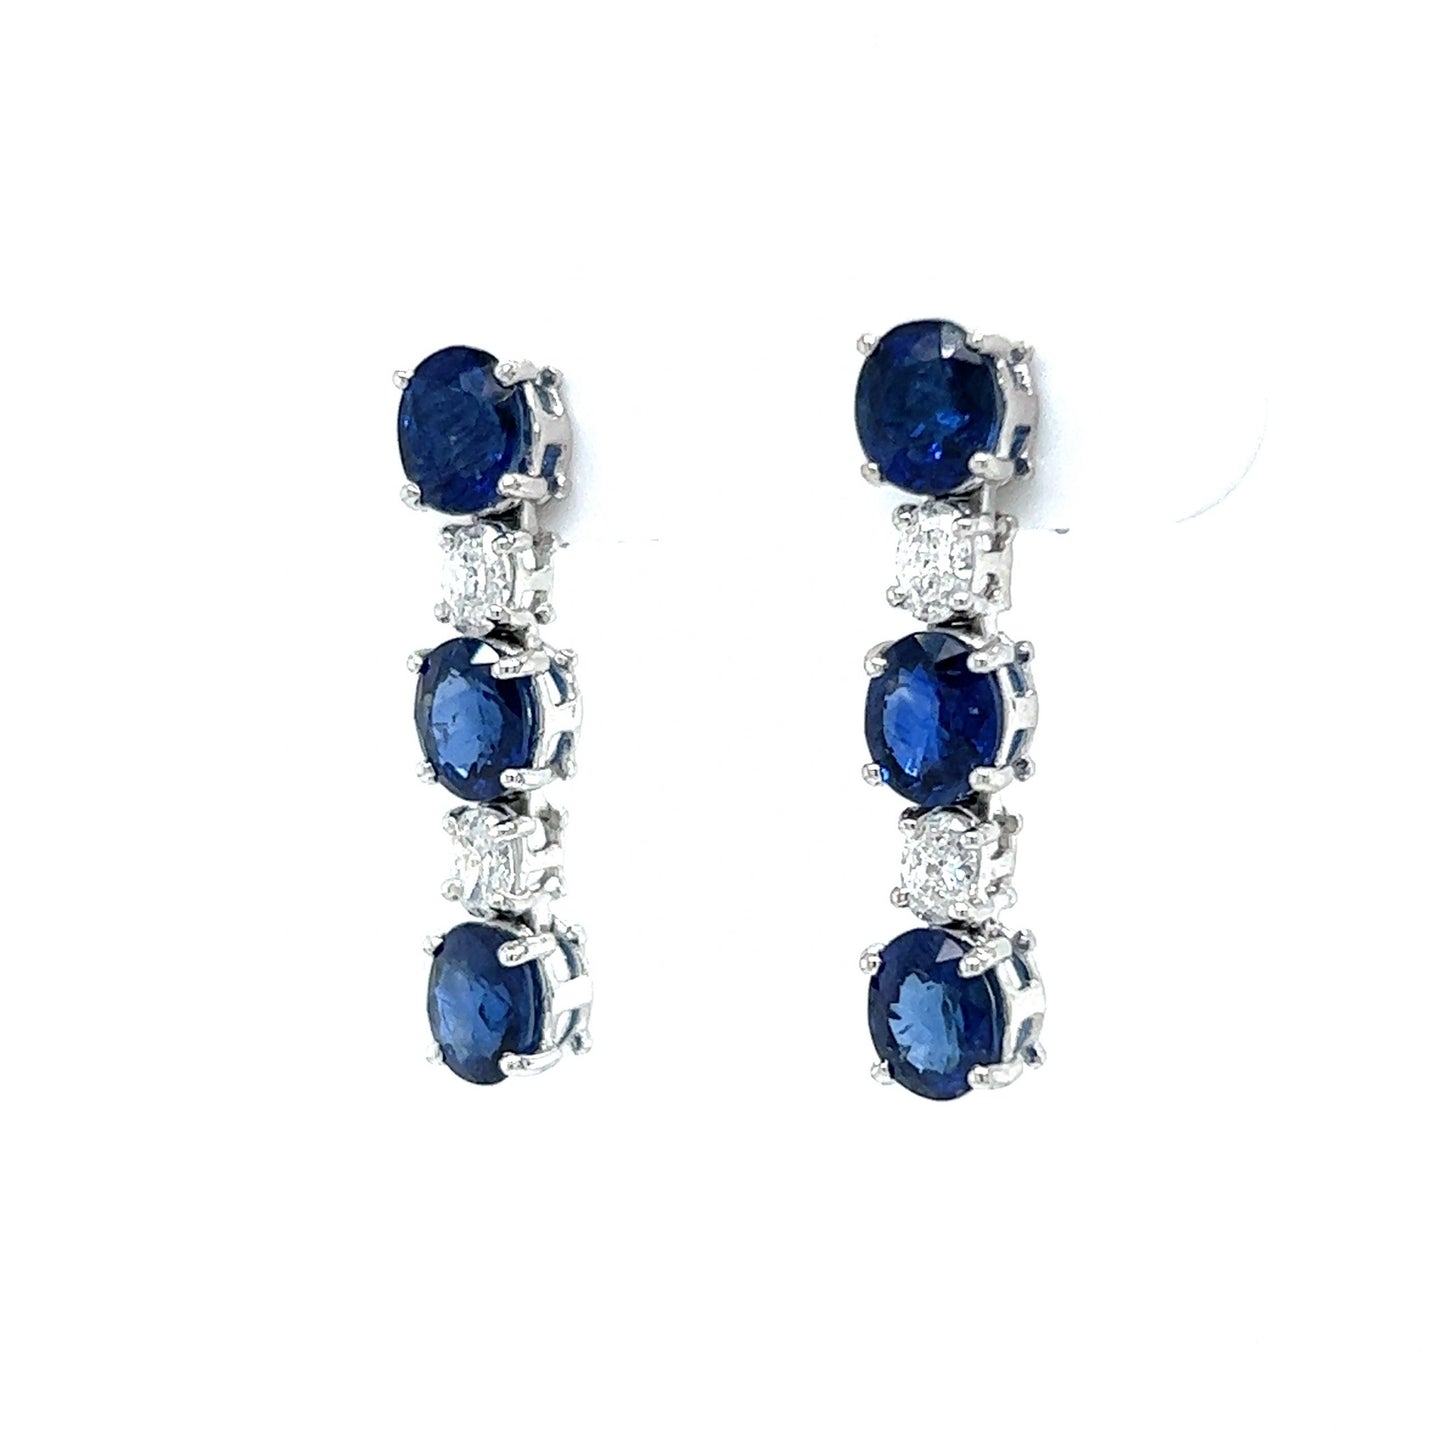 Elegant Oval Cut Sapphire & Diamond Earrings in 18k White Gold